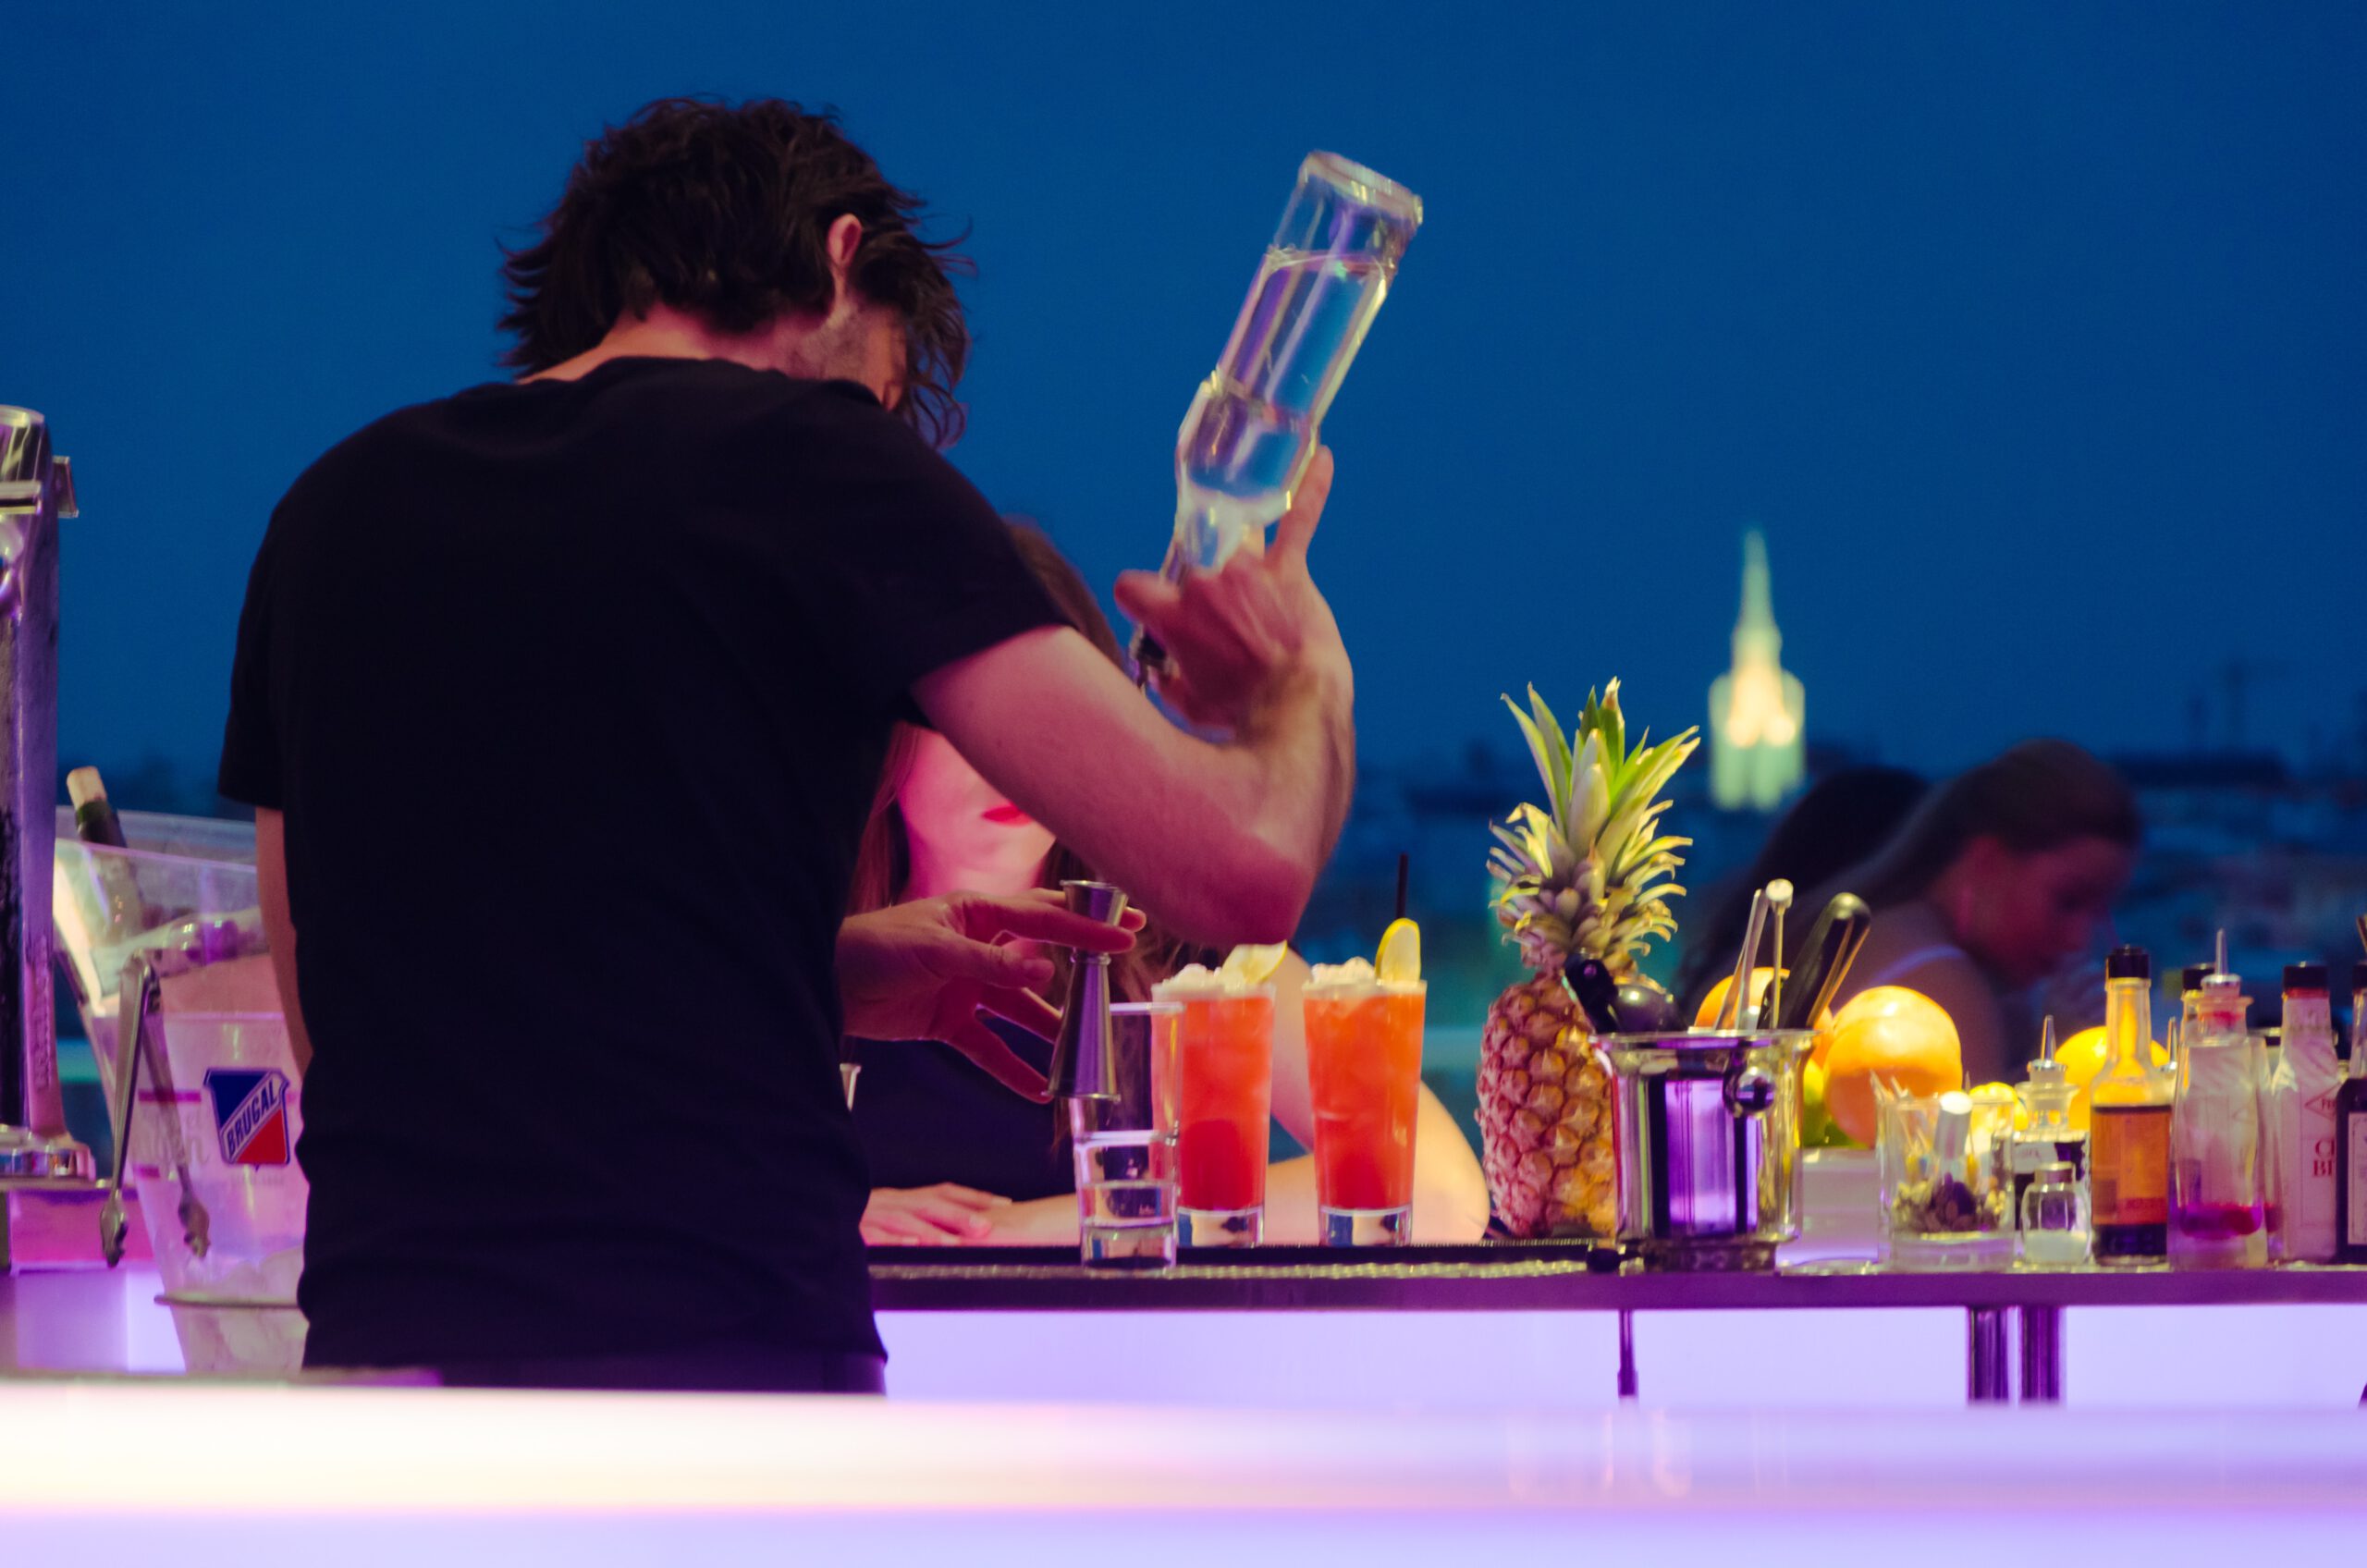 Best Dubai rooftop bars - Barman